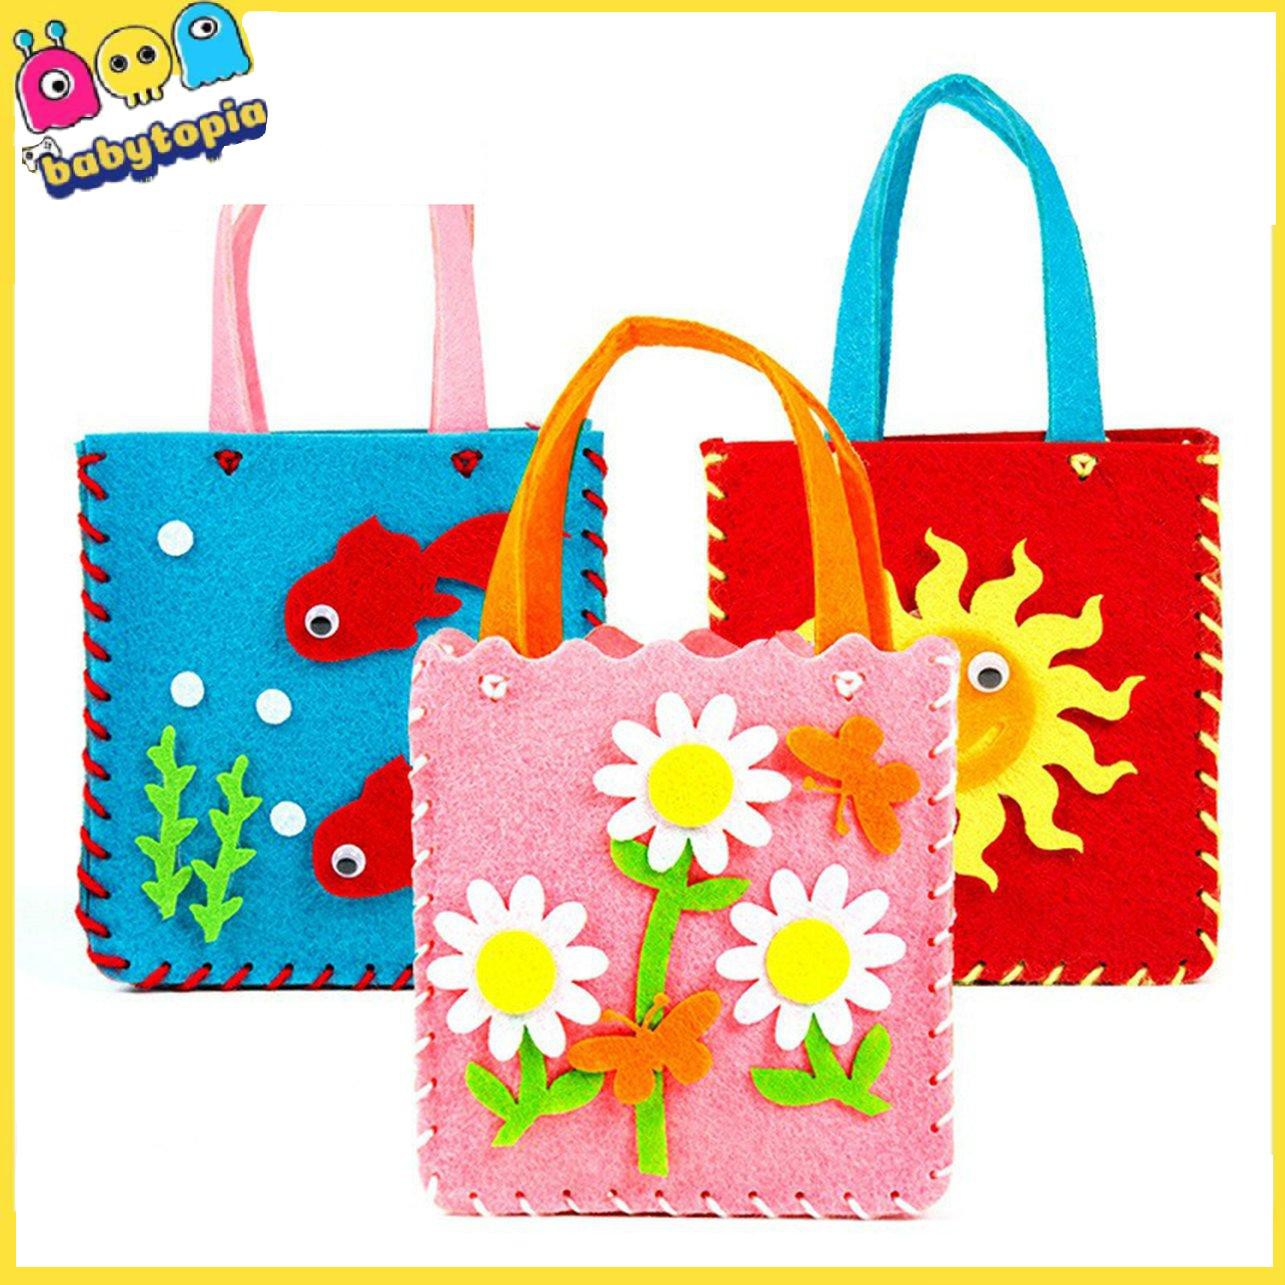 DIY Tote Bag Kindergarten Handmade Creative Paste Material Bag Candy Bag Gift Educational Toy Colorful